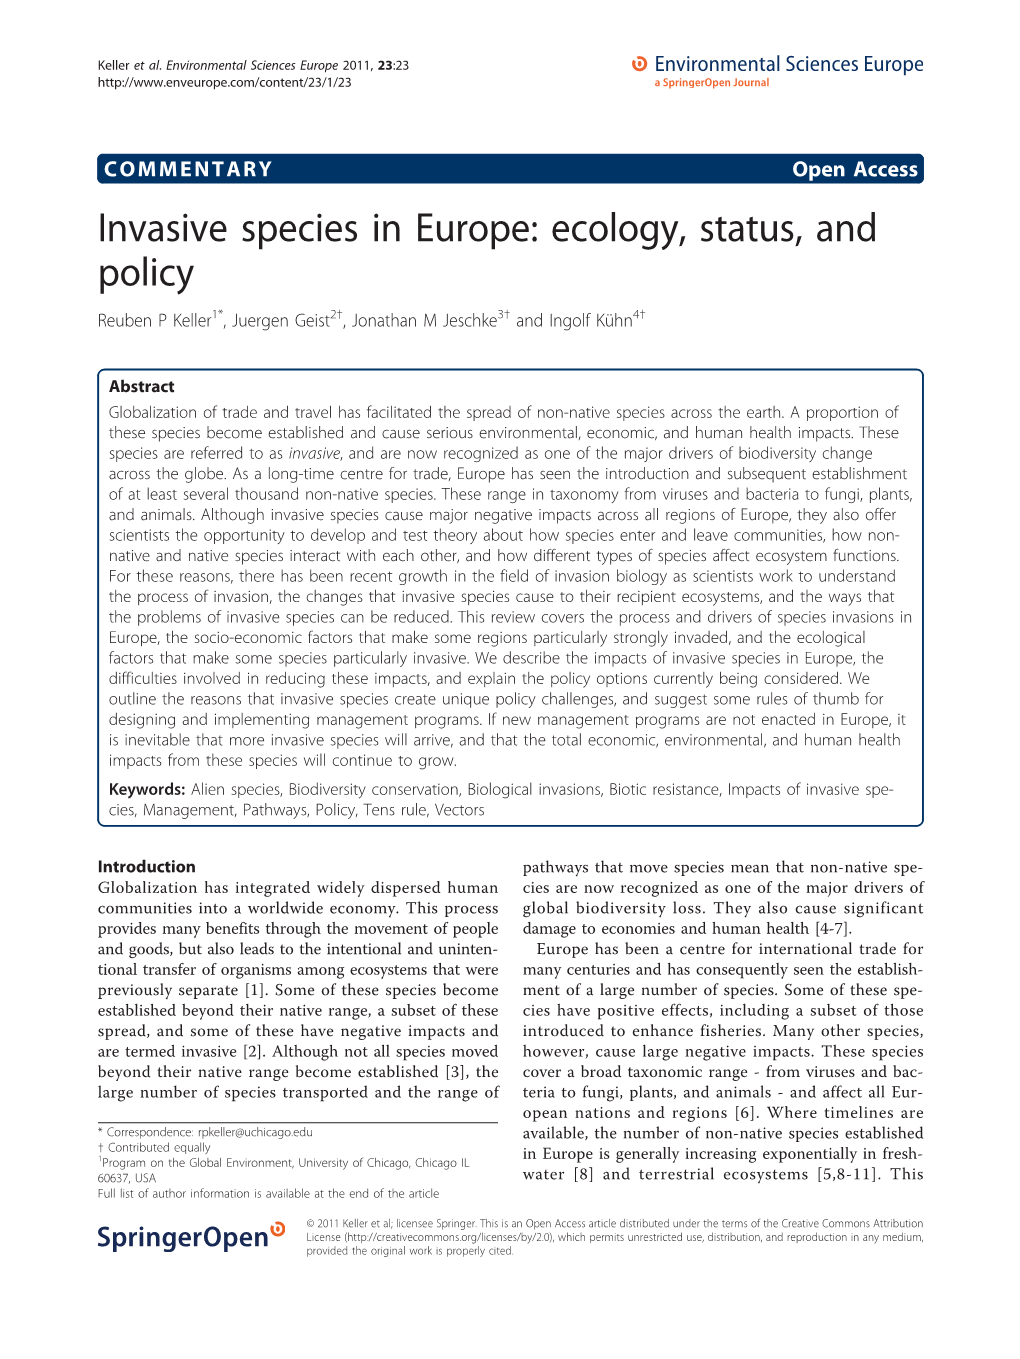 Invasive Species in Europe: Ecology, Status, and Policy Reuben P Keller1*, Juergen Geist2†, Jonathan M Jeschke3† and Ingolf Kühn4†